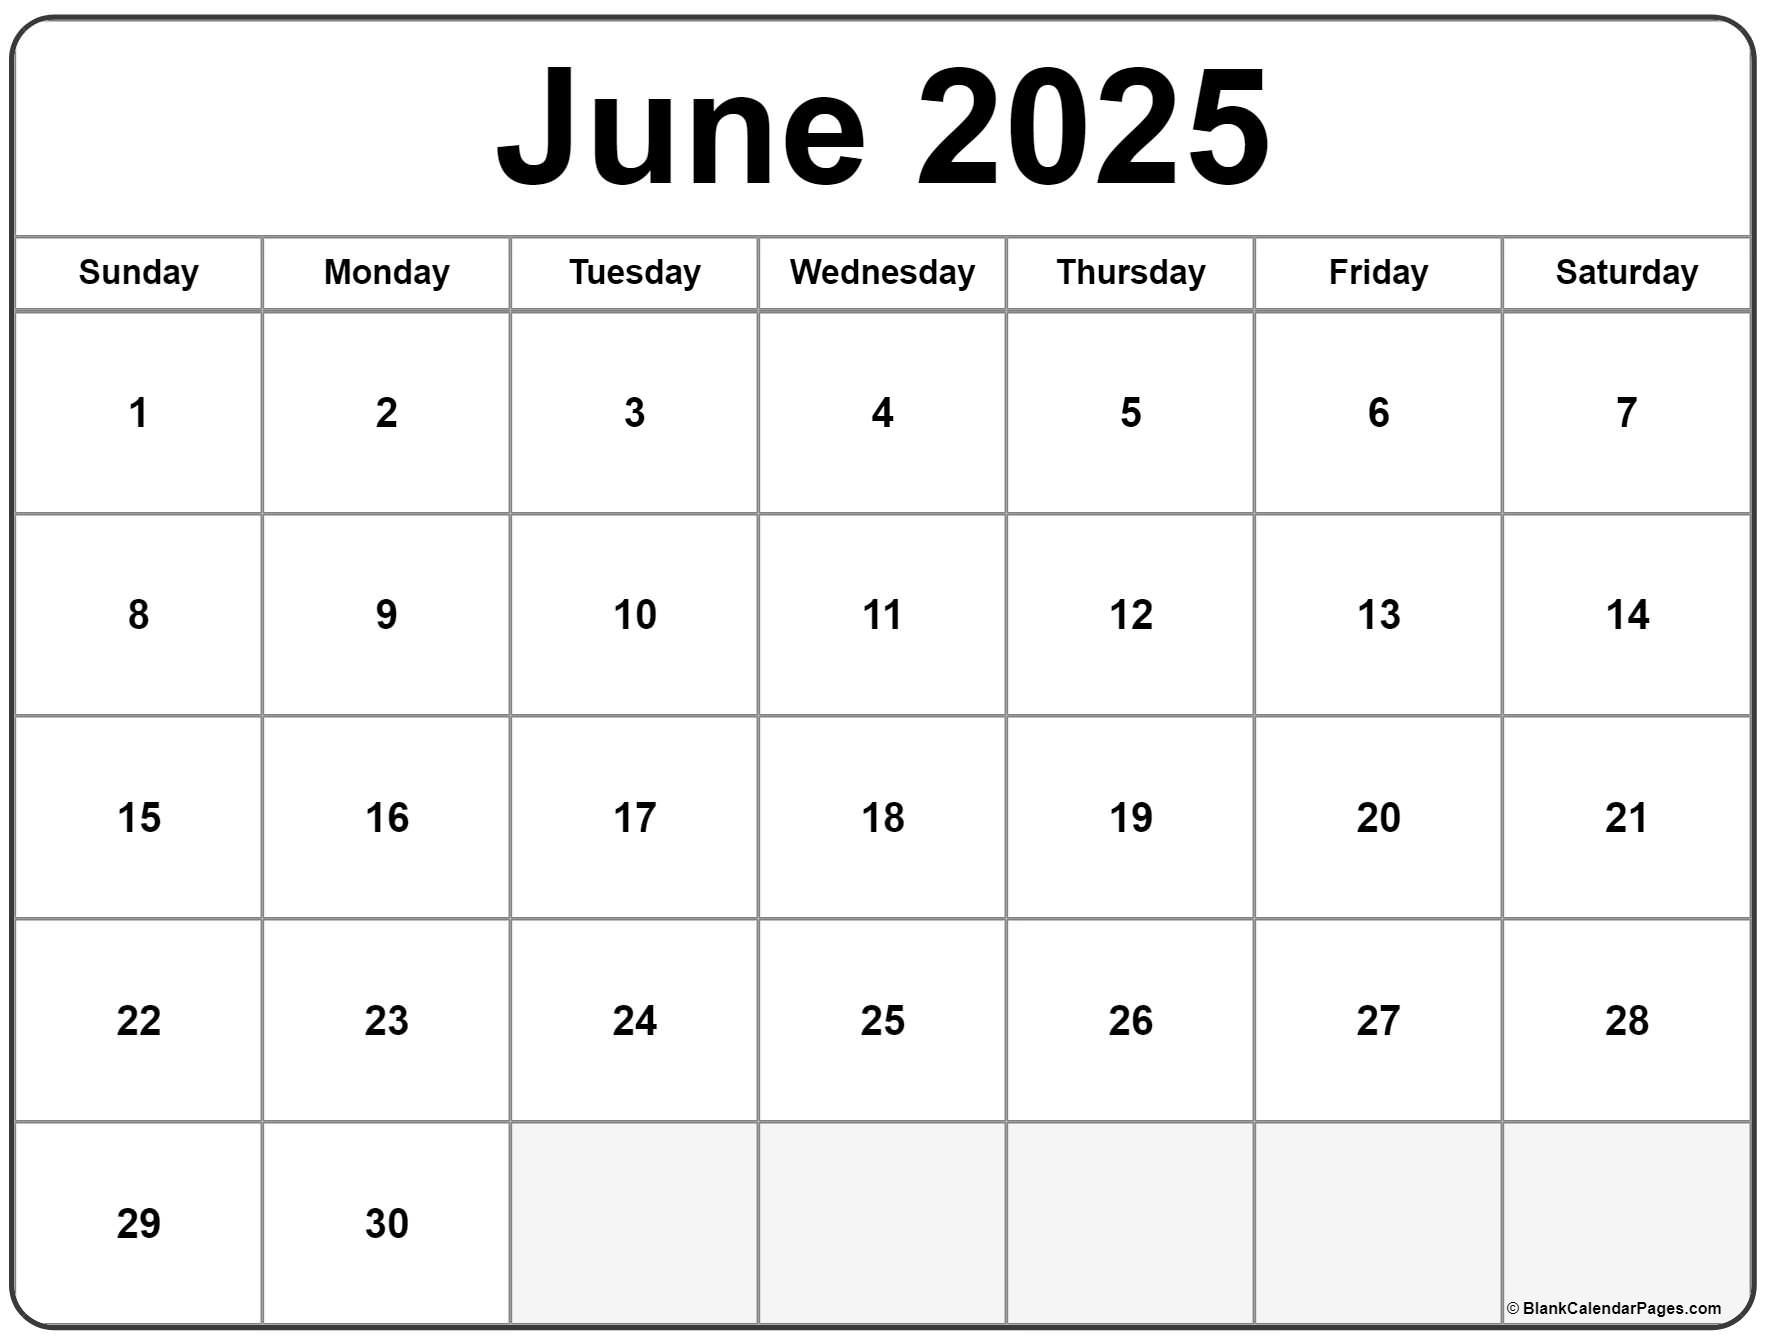 June 2025 calendar  free printable calendar